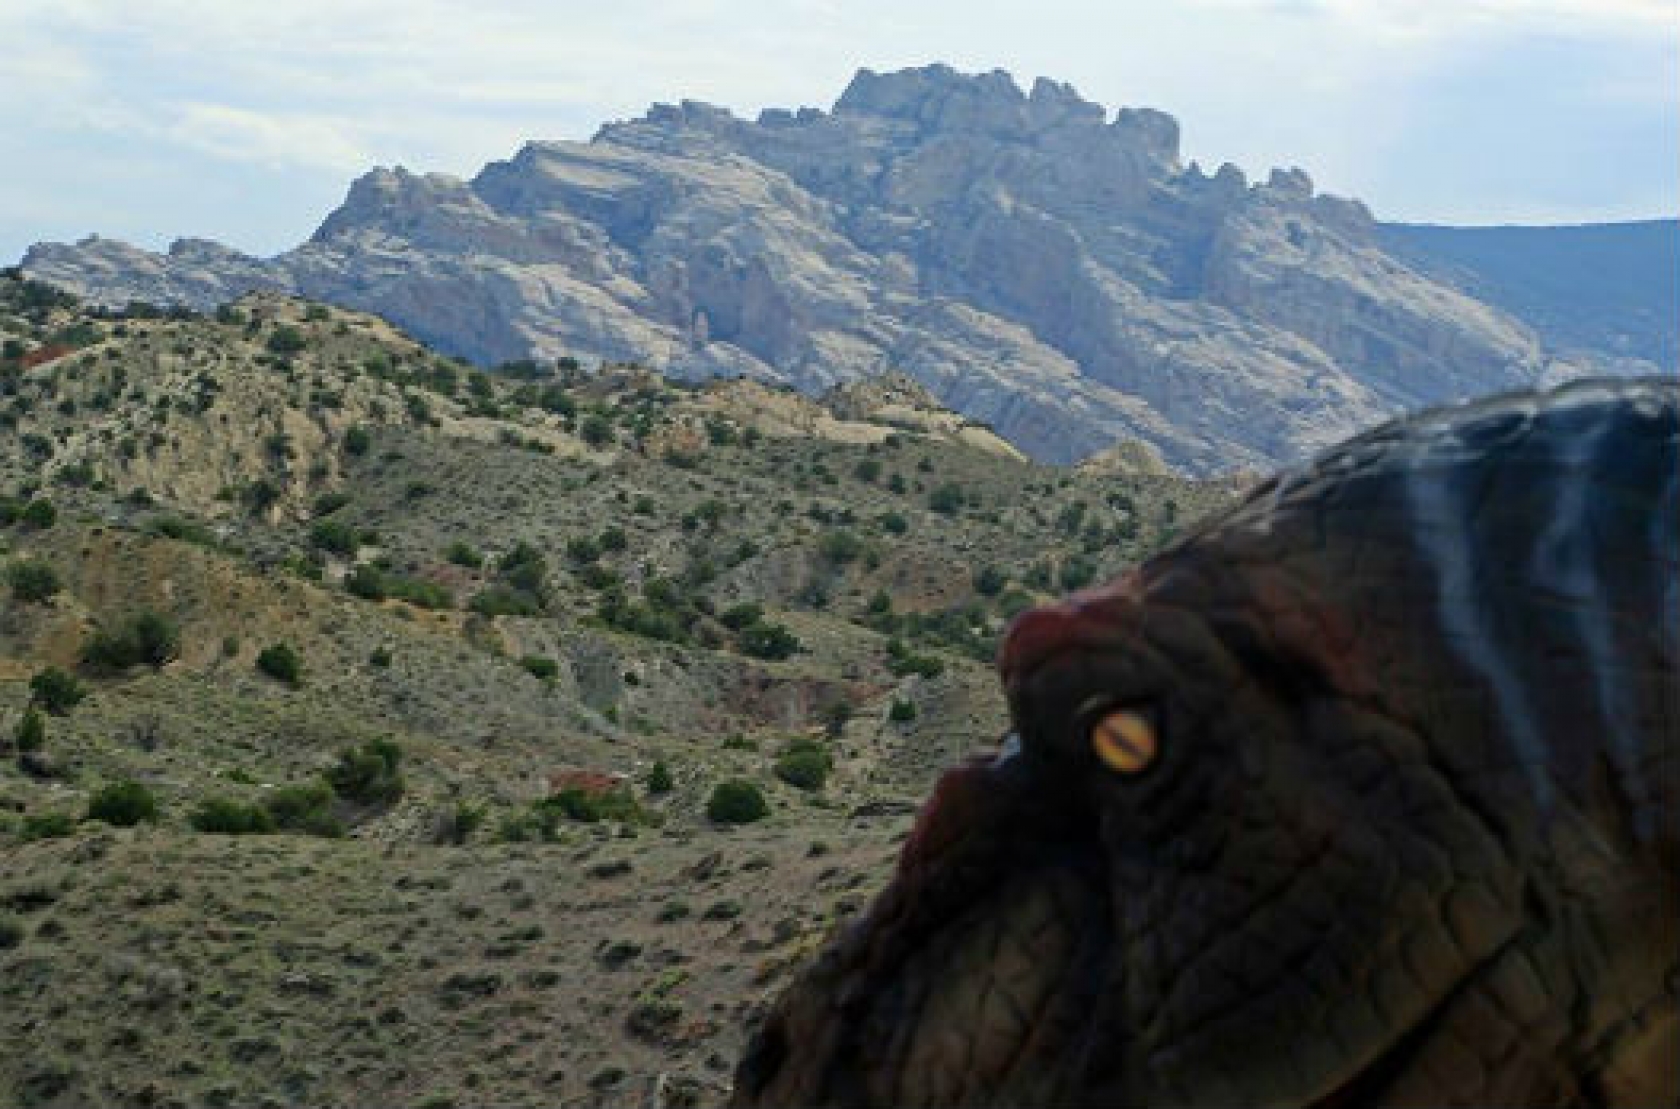 A photoshopped dinosaur at Dinosaur National Monument